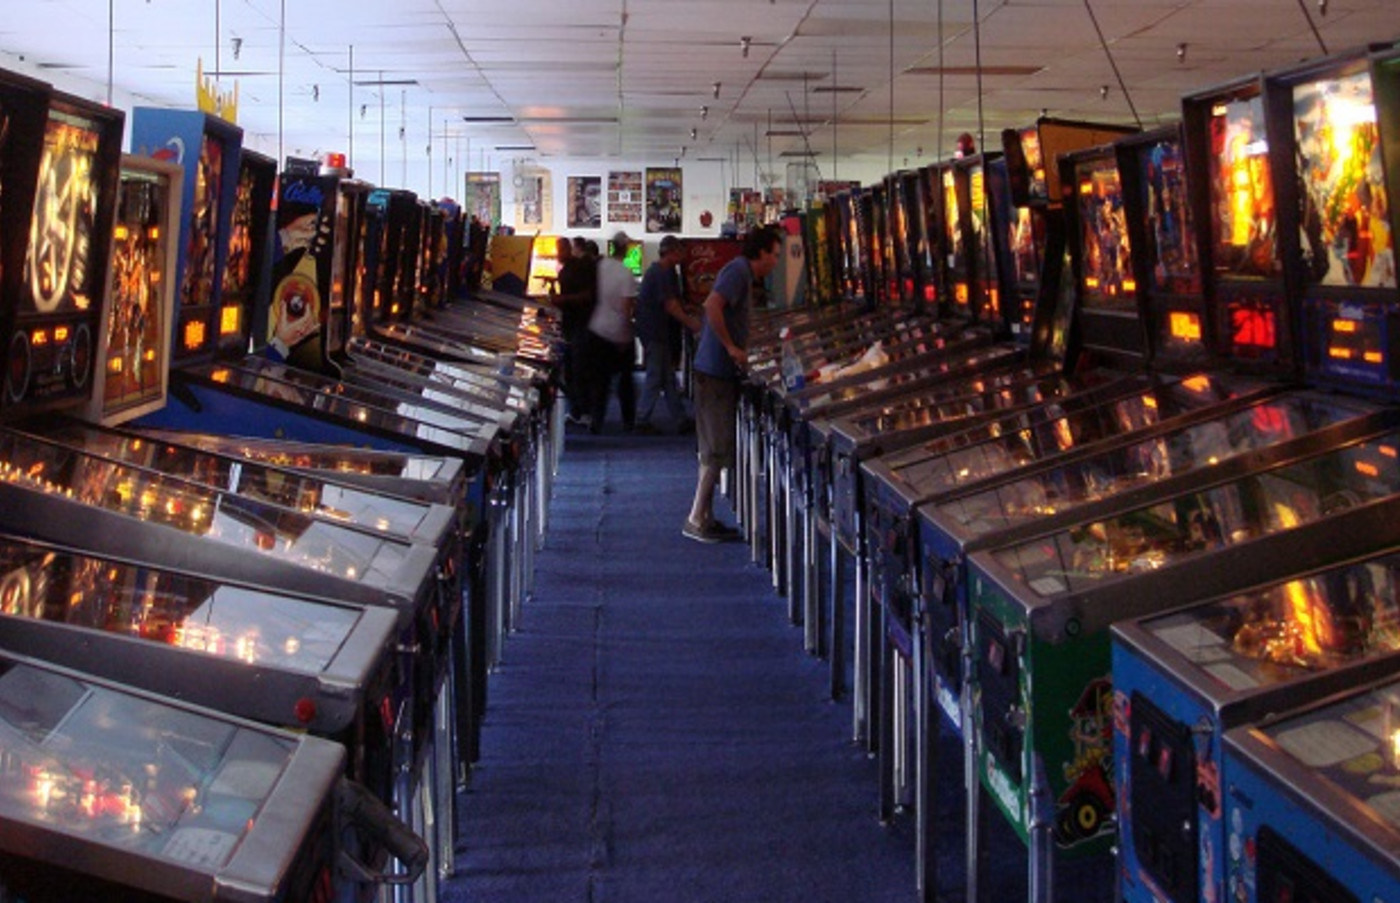 pinball arcade pittsburgh